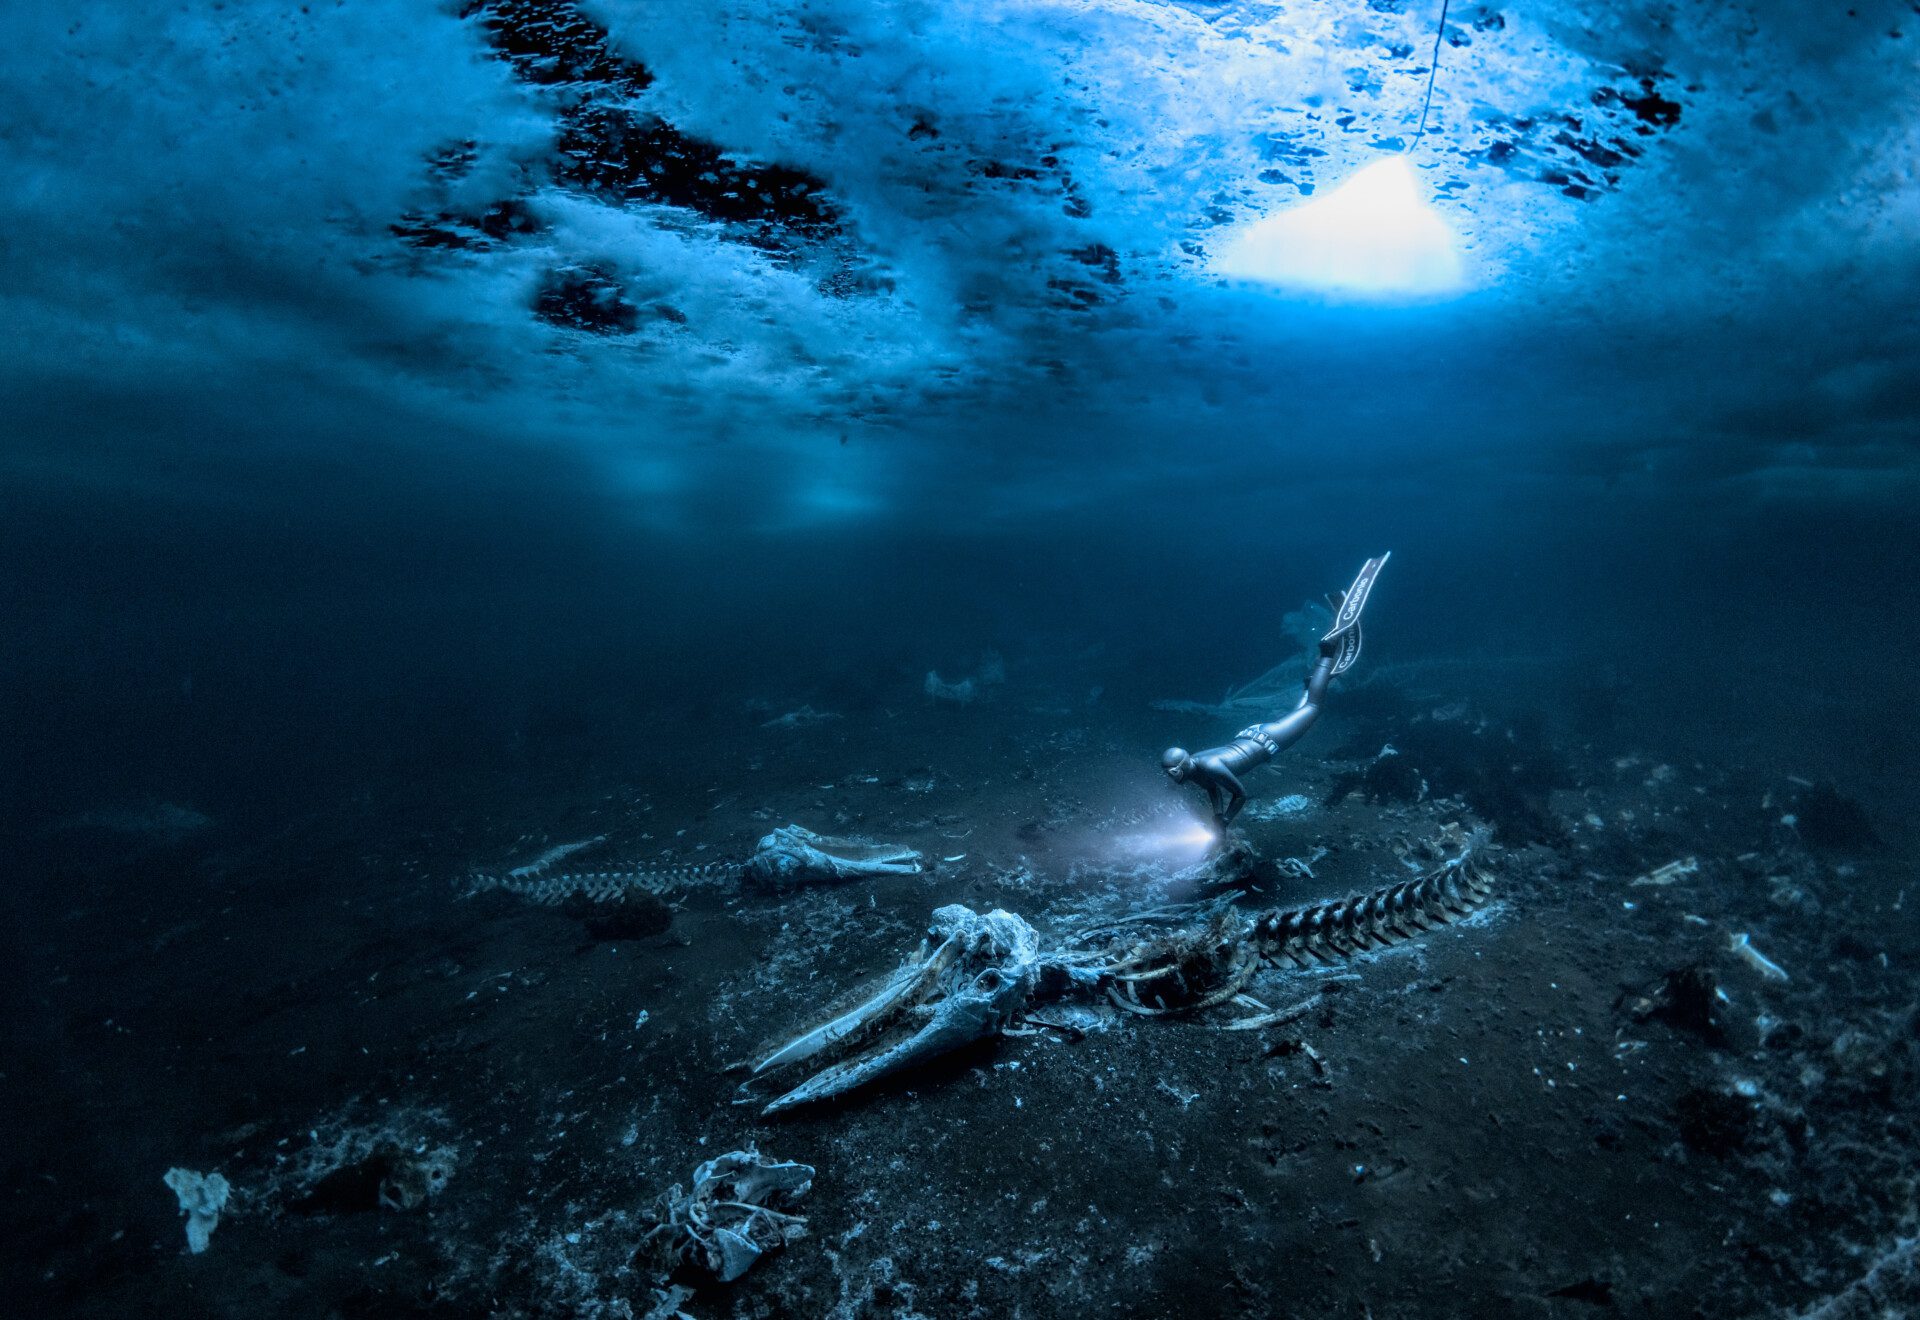 Whale skeletons under ice judged world's best underwater photograph